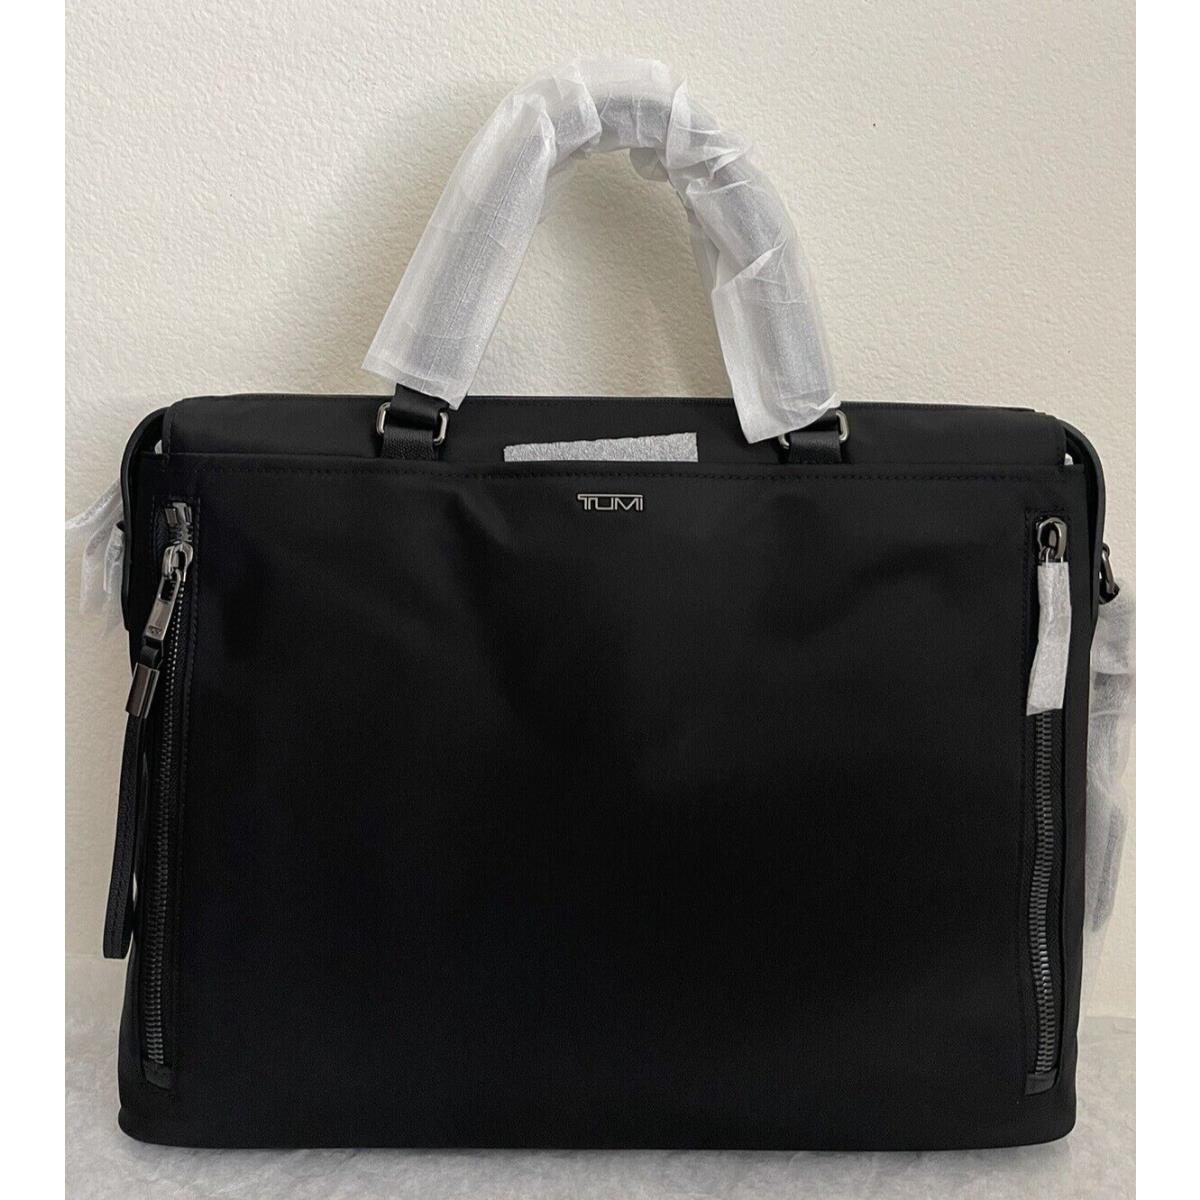 Tumi Voyageur Kendallville Briefcase Bag Black/gunmetal